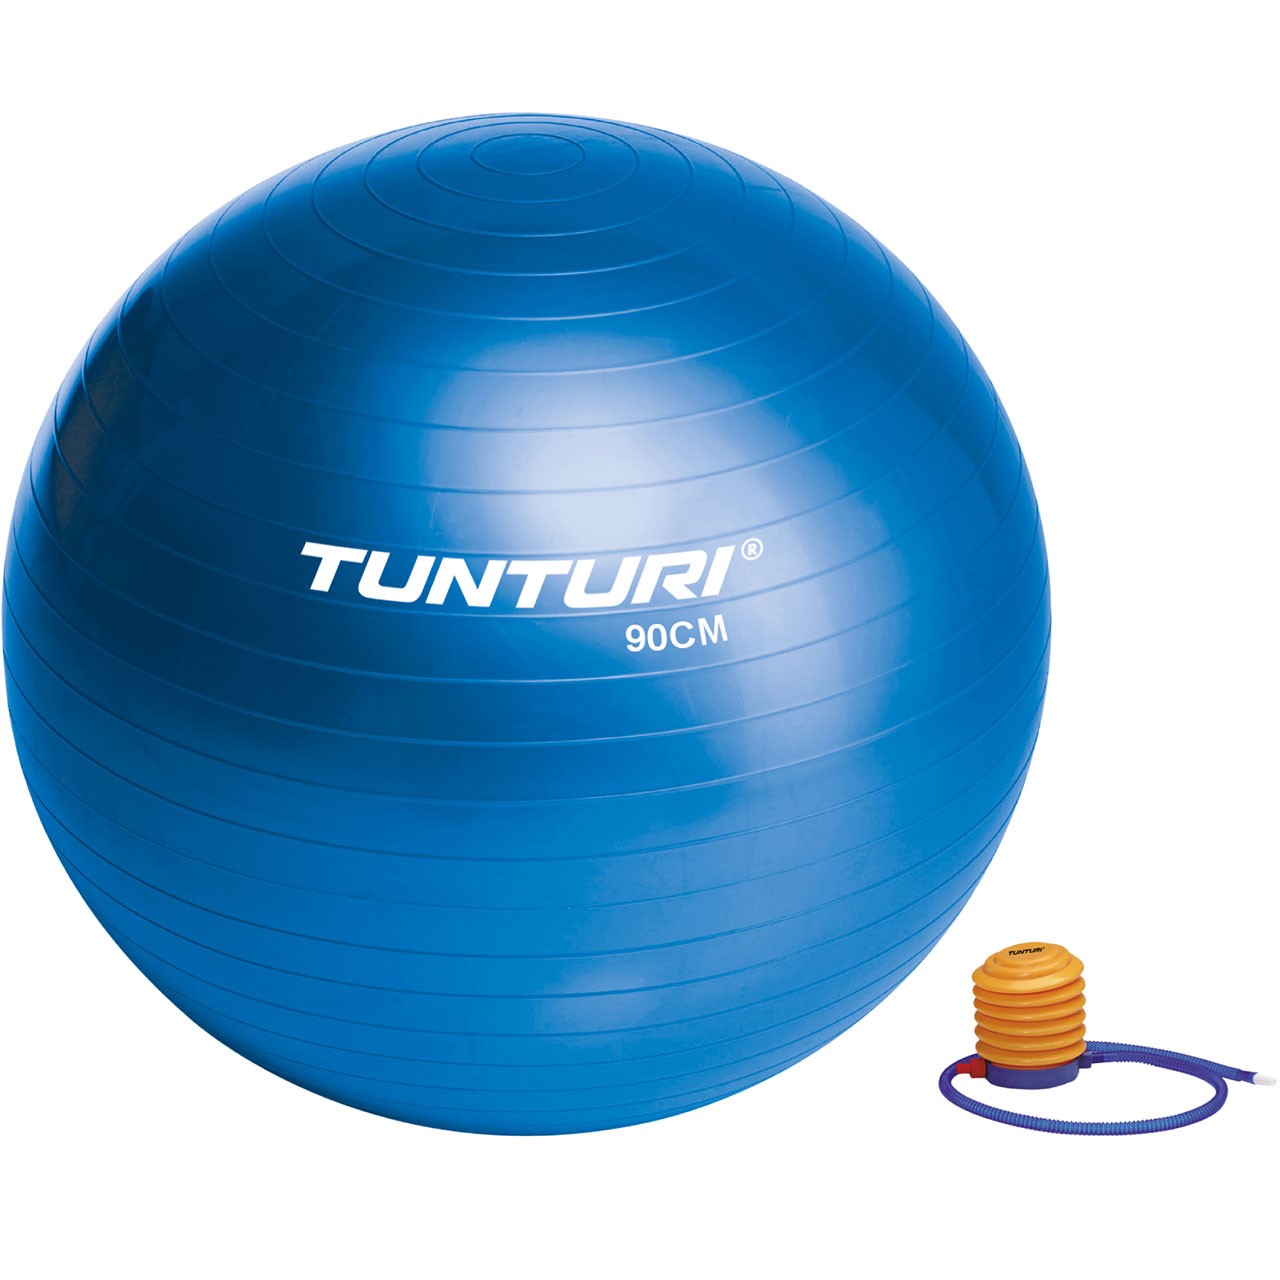 Tunturi Gym Ball - Gymnastikball Sitzball 90 cm